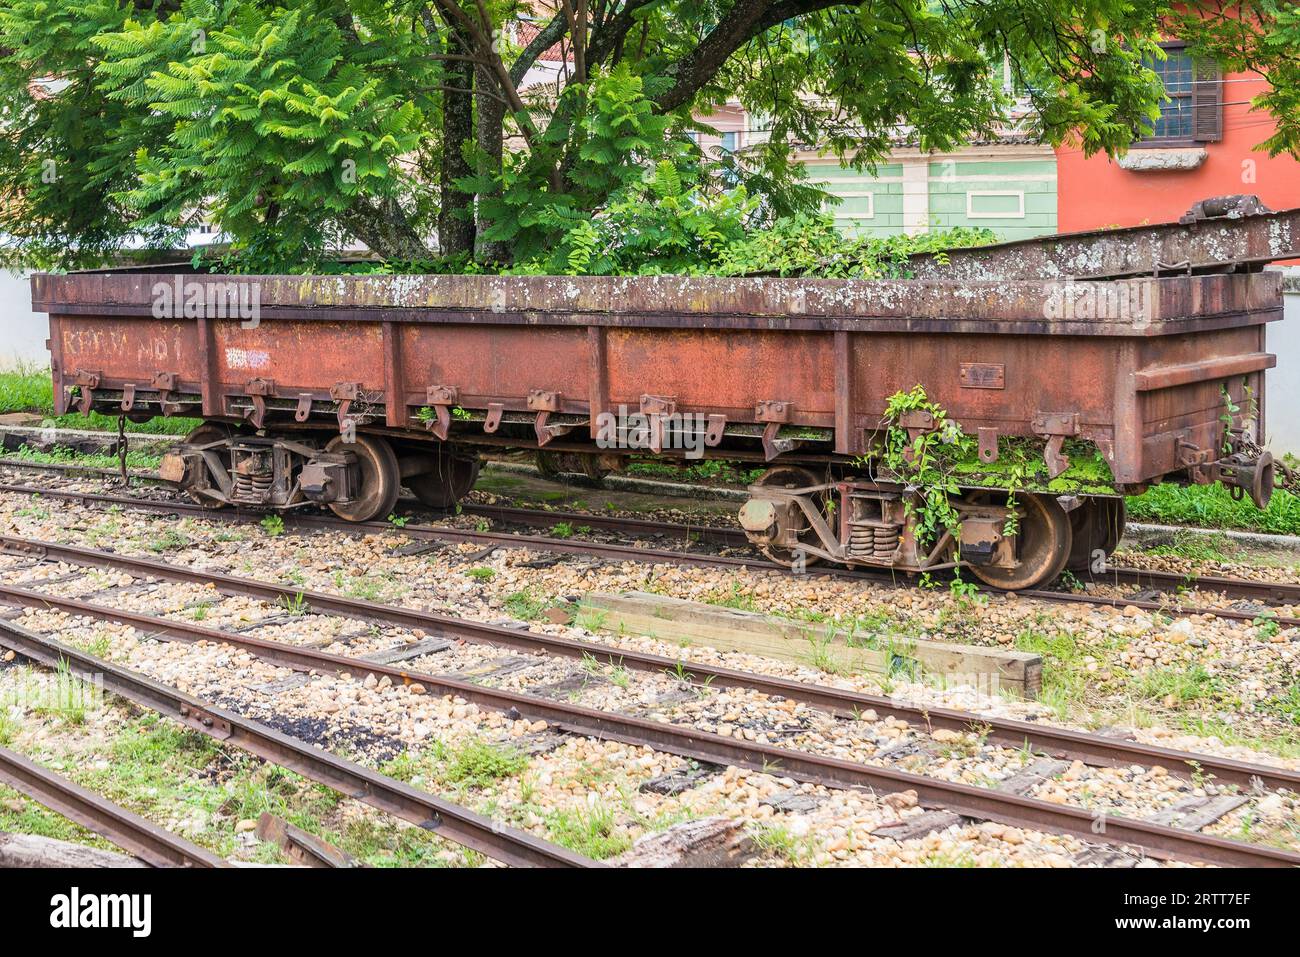 Old May Smoke Train deaktivierte Wagen am Bahnhof in Sao Joao Del Rey, einer kolonialen UNESCO-Weltkulturerbestadt Stockfoto